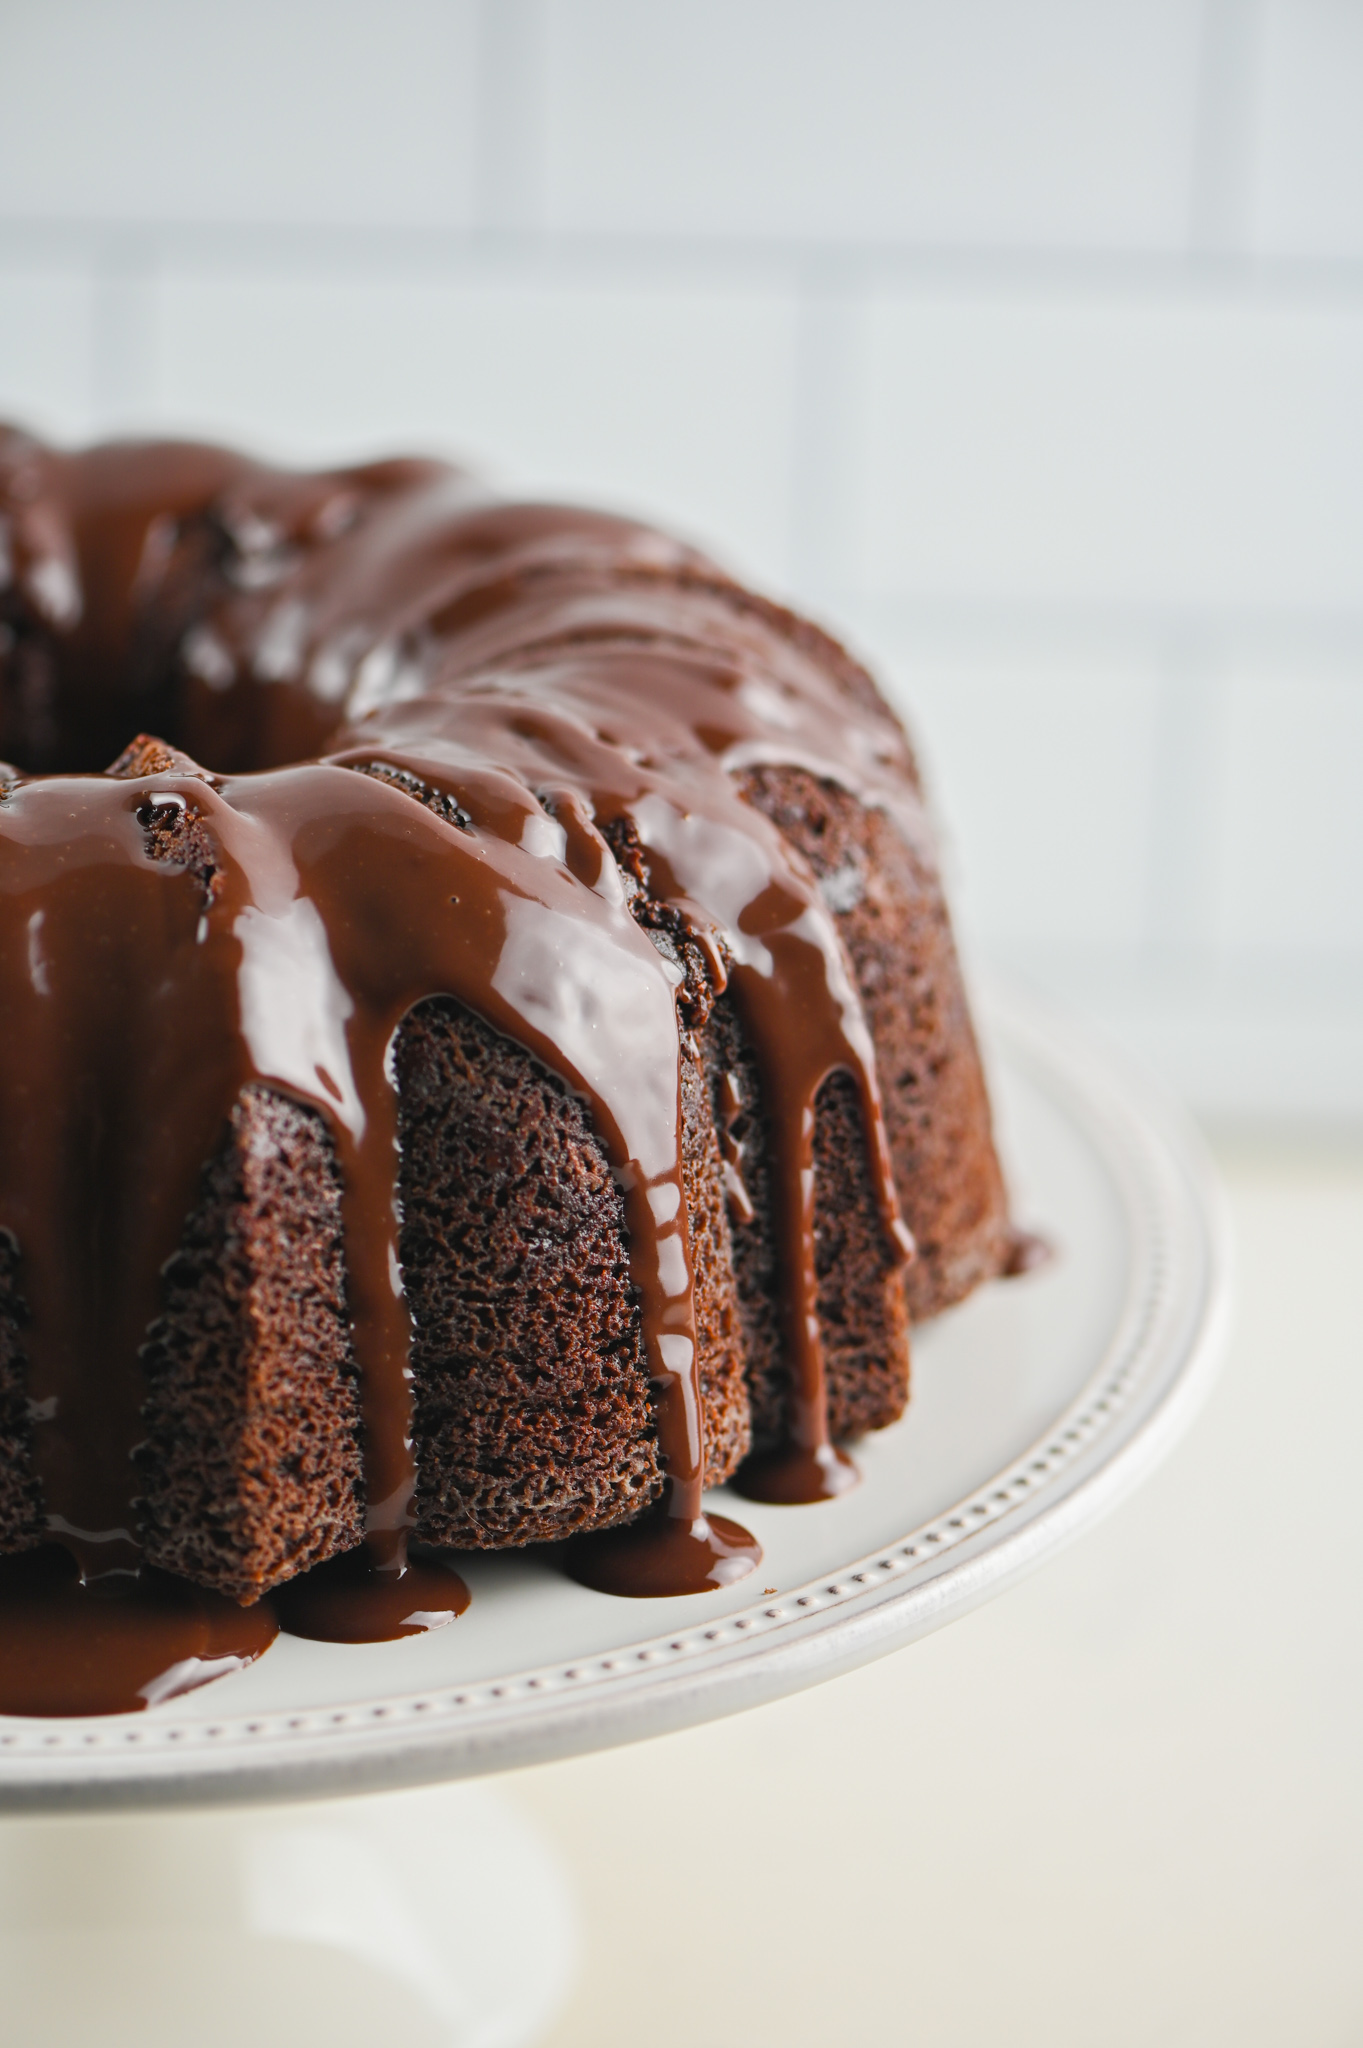 Chocolate Bundt Cake Recipe